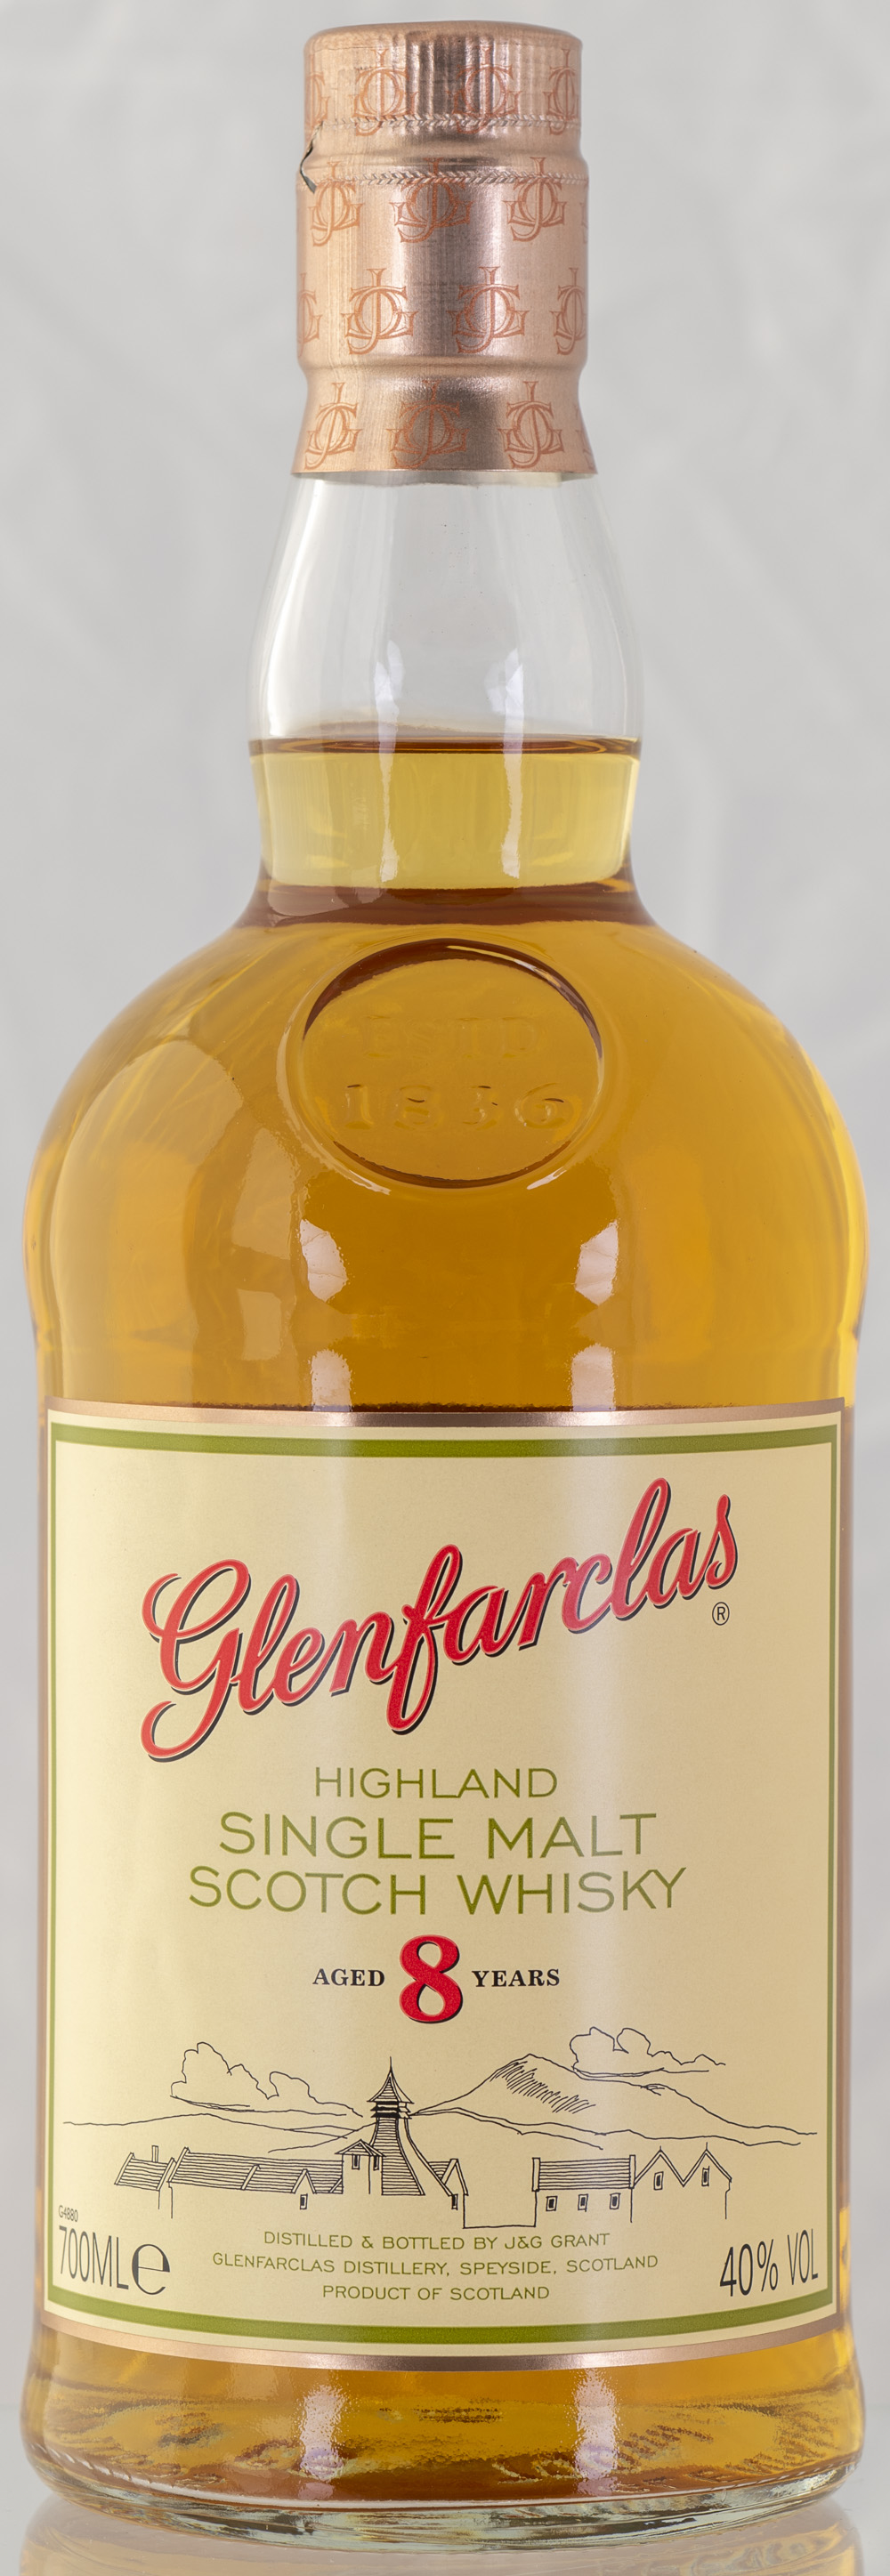 Billede: PHC_2238 - Glenfarclas 8 - bottle front.jpg